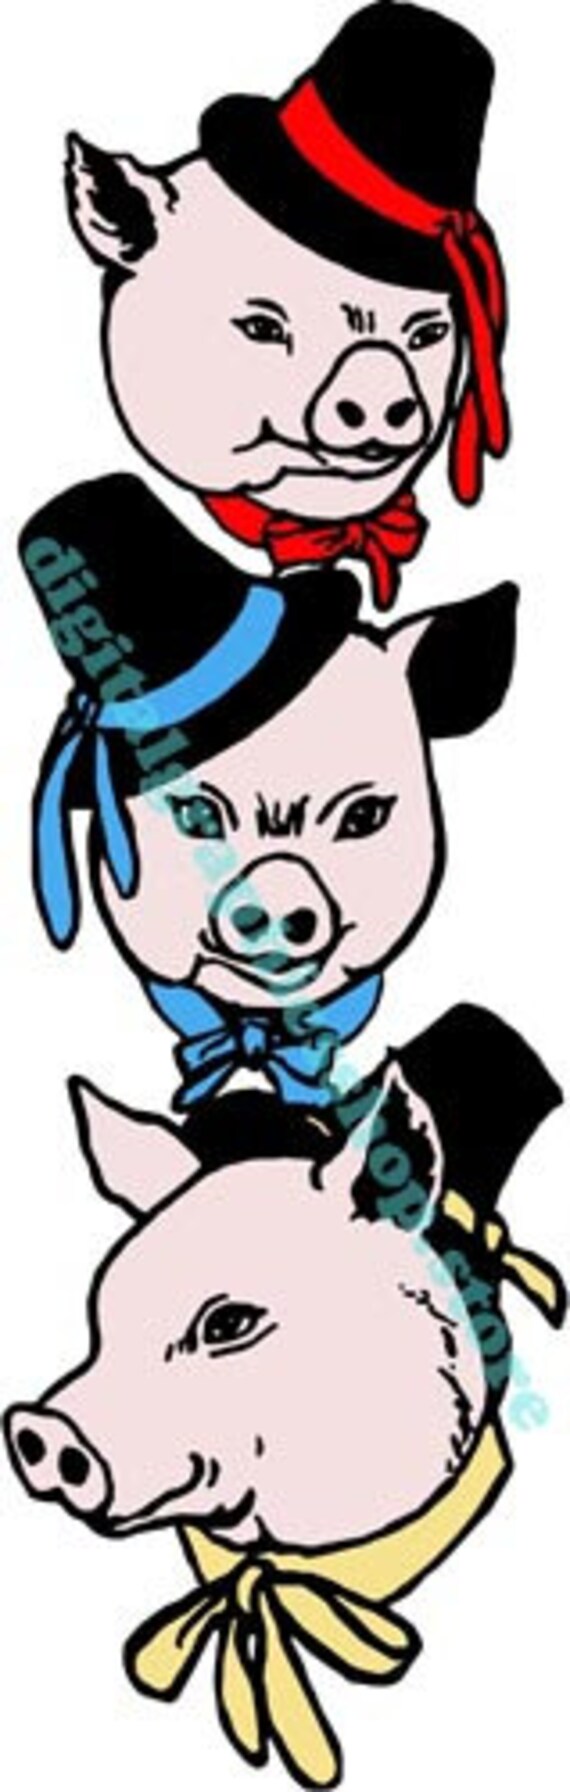 3 little pigs png jpg color clipart printable art digital download cartoon farm animals nursery kids room downloadable graphics images